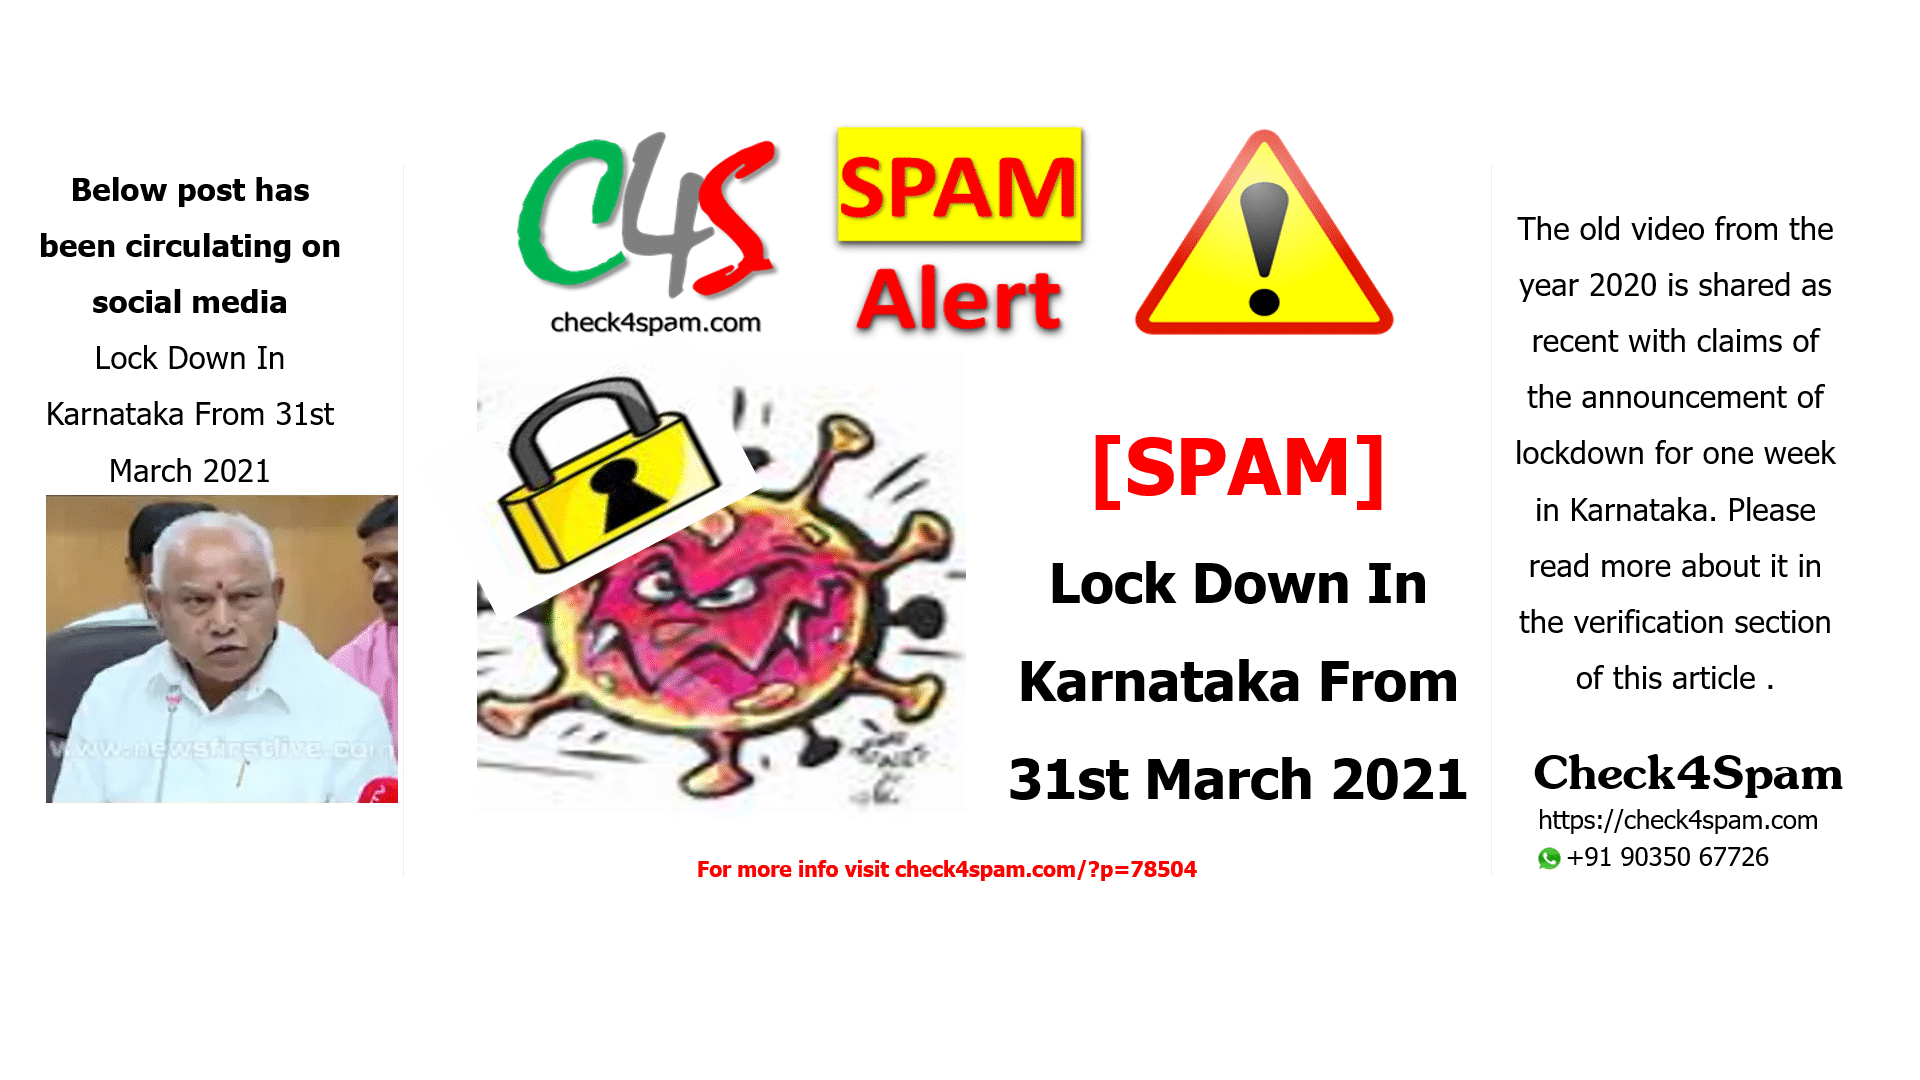 Lock Down In Karnataka From 31st March 2021